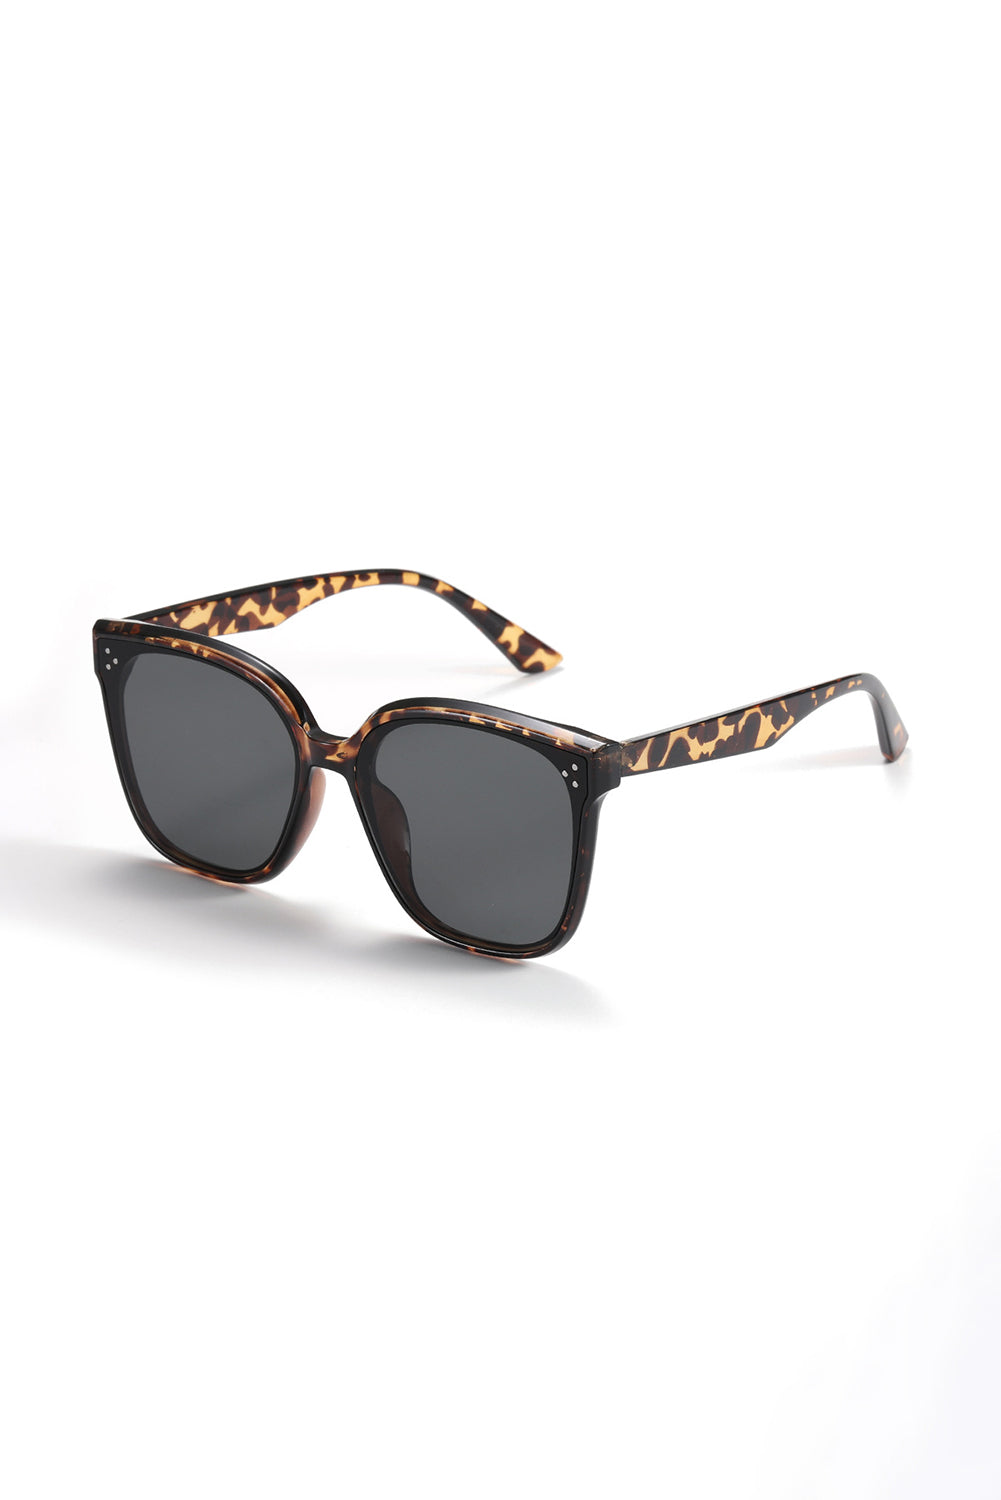 Leopard Square Frame Vintage Sunglasses - SELFTRITSS